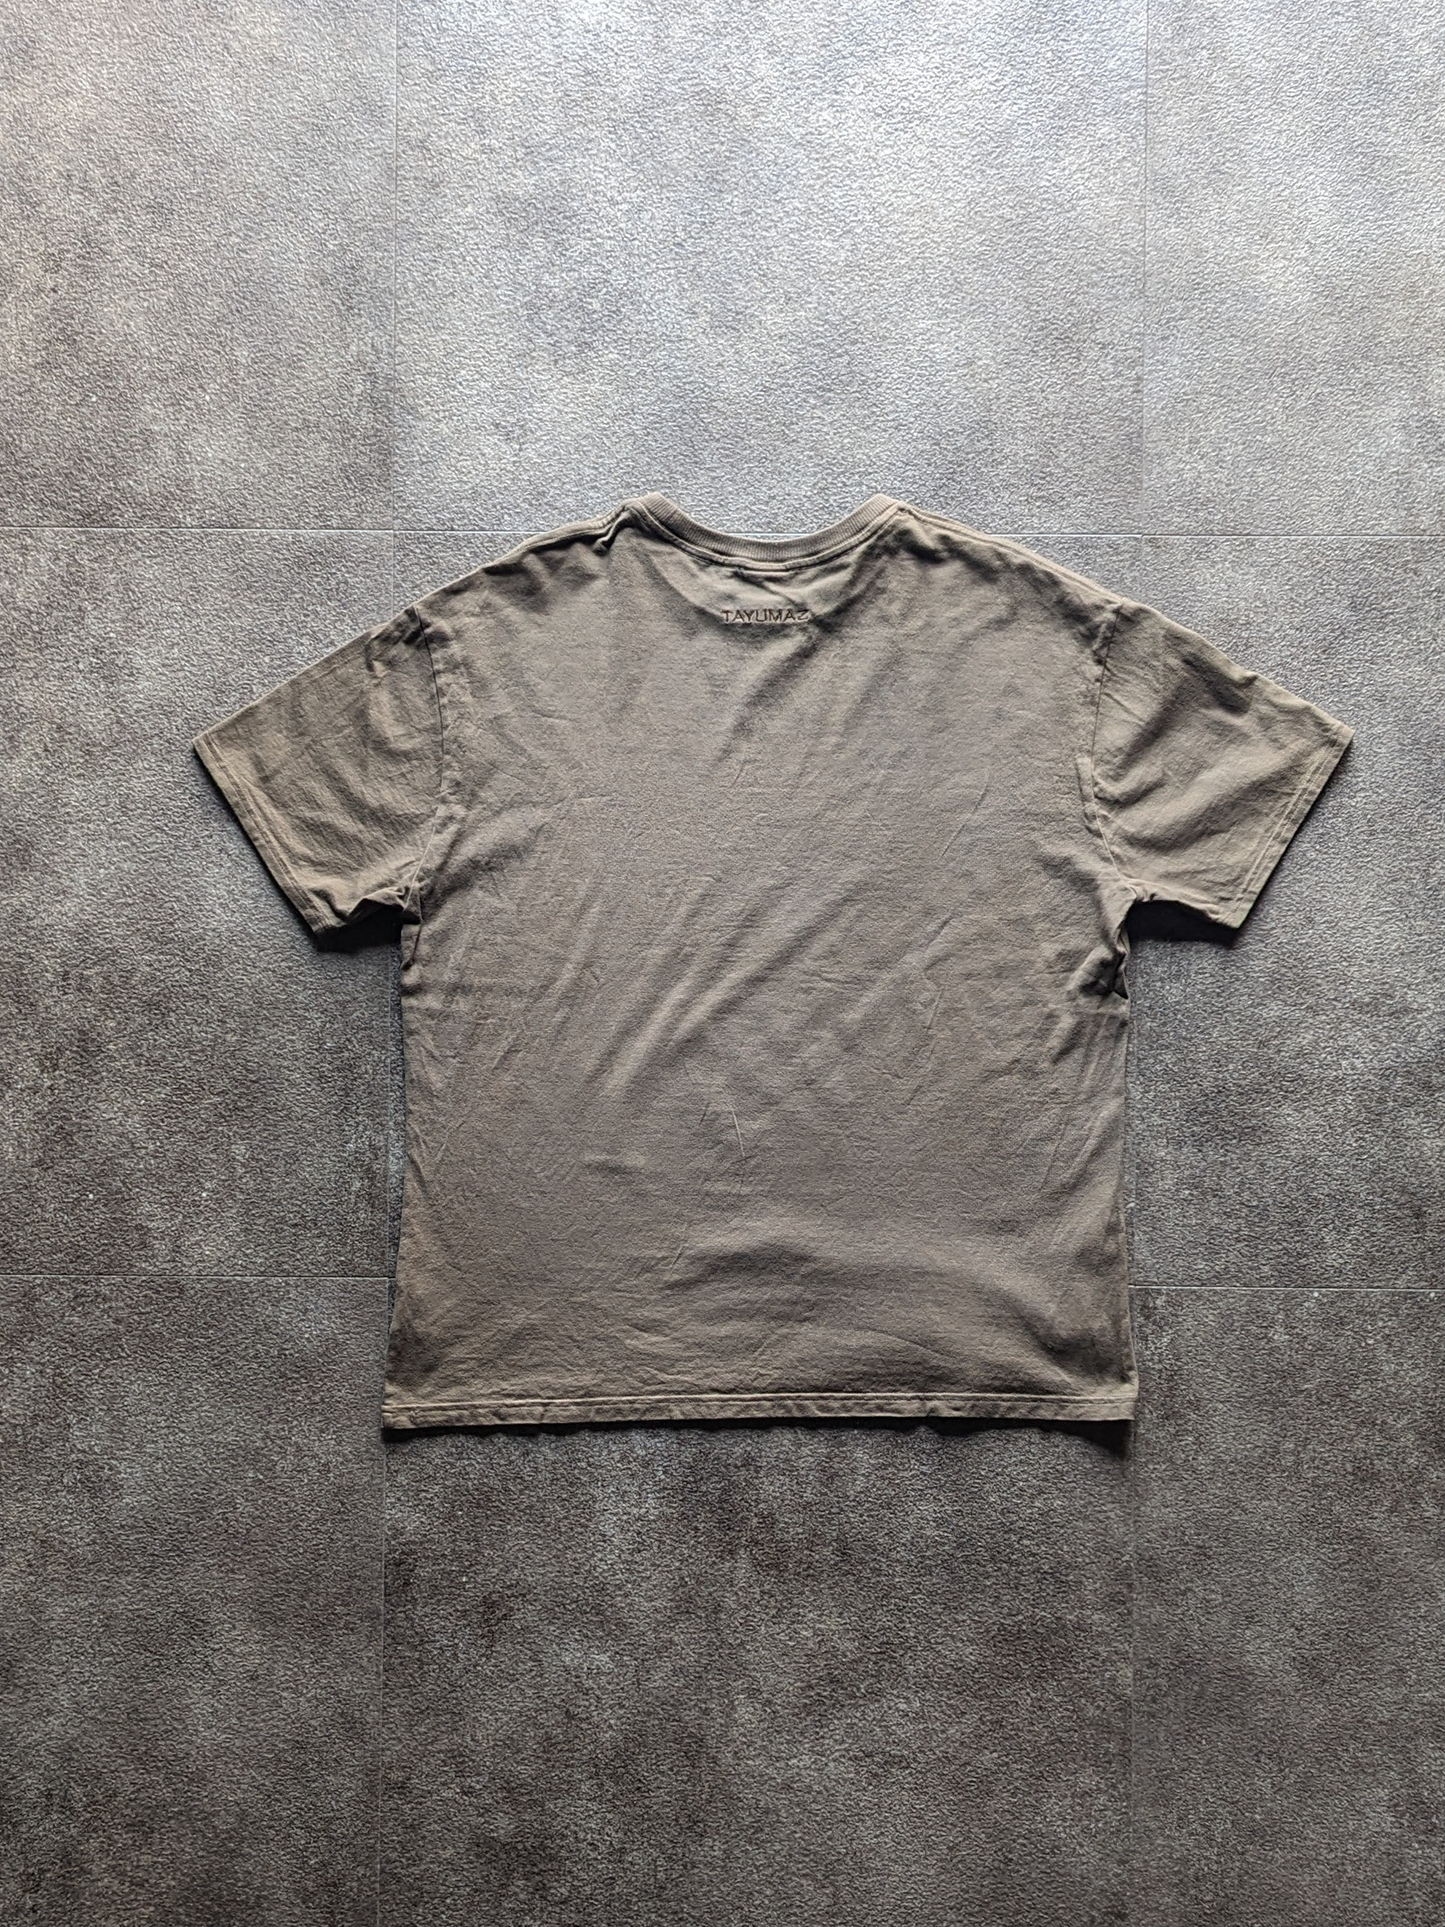 Washed cotton T-shirt in khaki